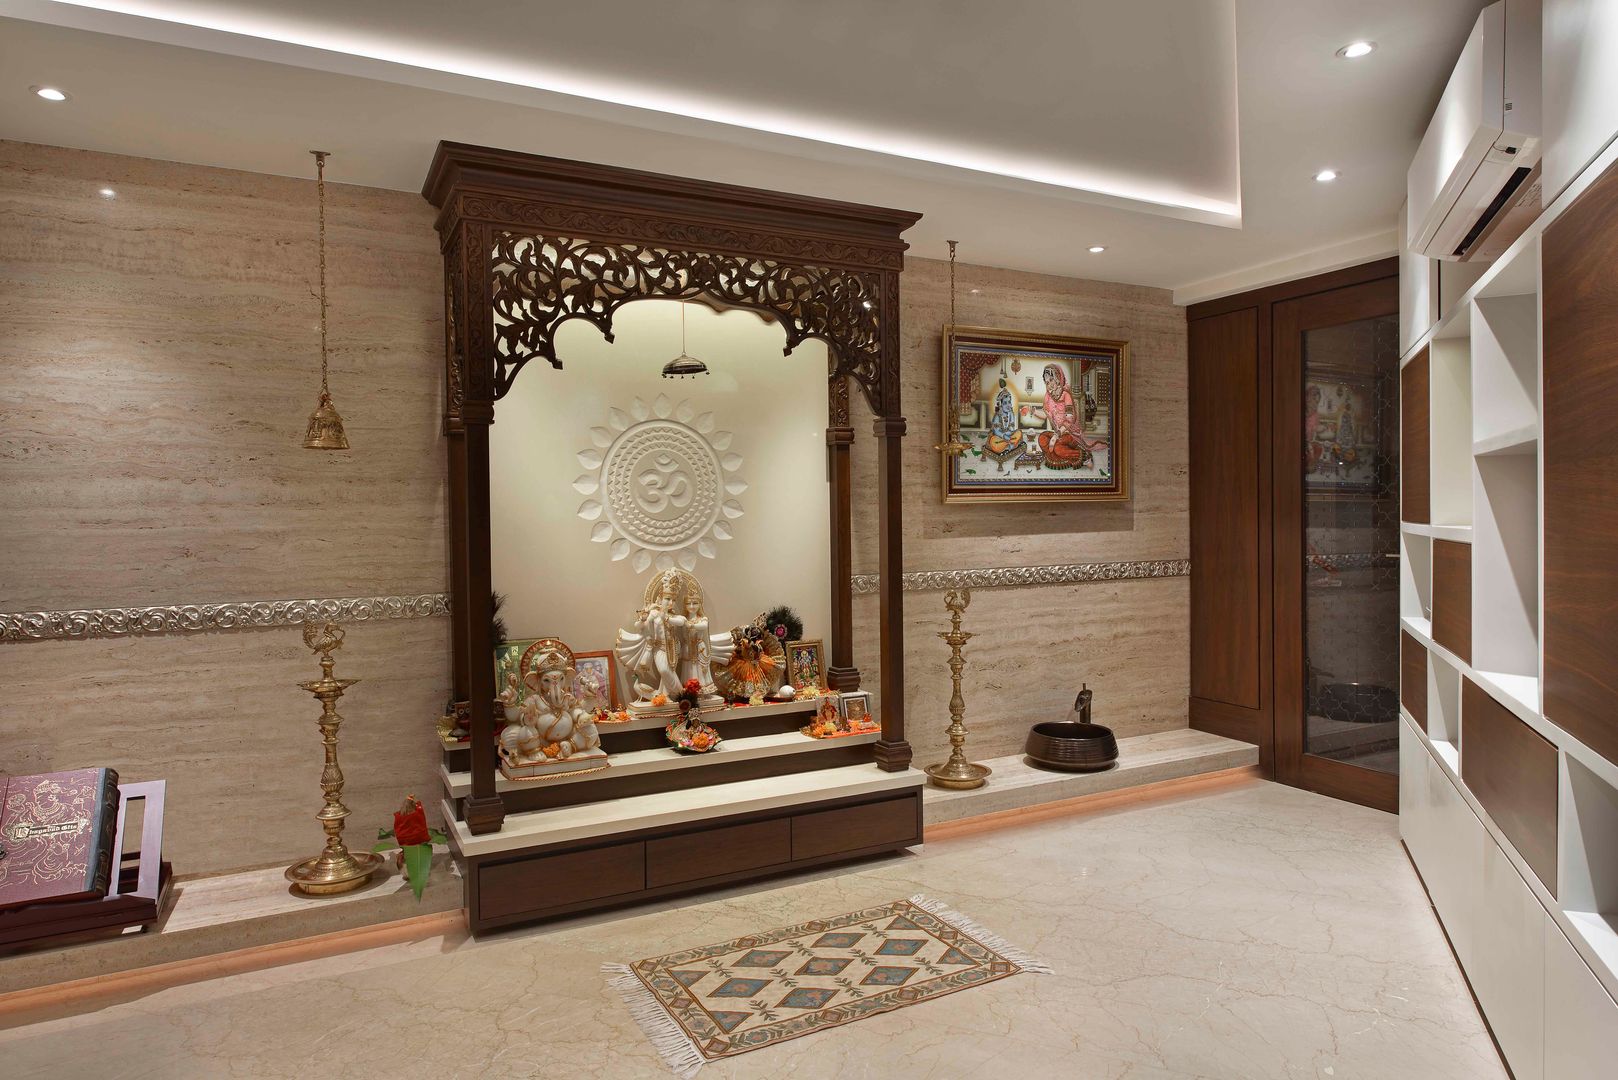 The Warm Bliss, Milind Pai - Architects & Interior Designers Milind Pai - Architects & Interior Designers Minimalistische Arbeitszimmer Marmor